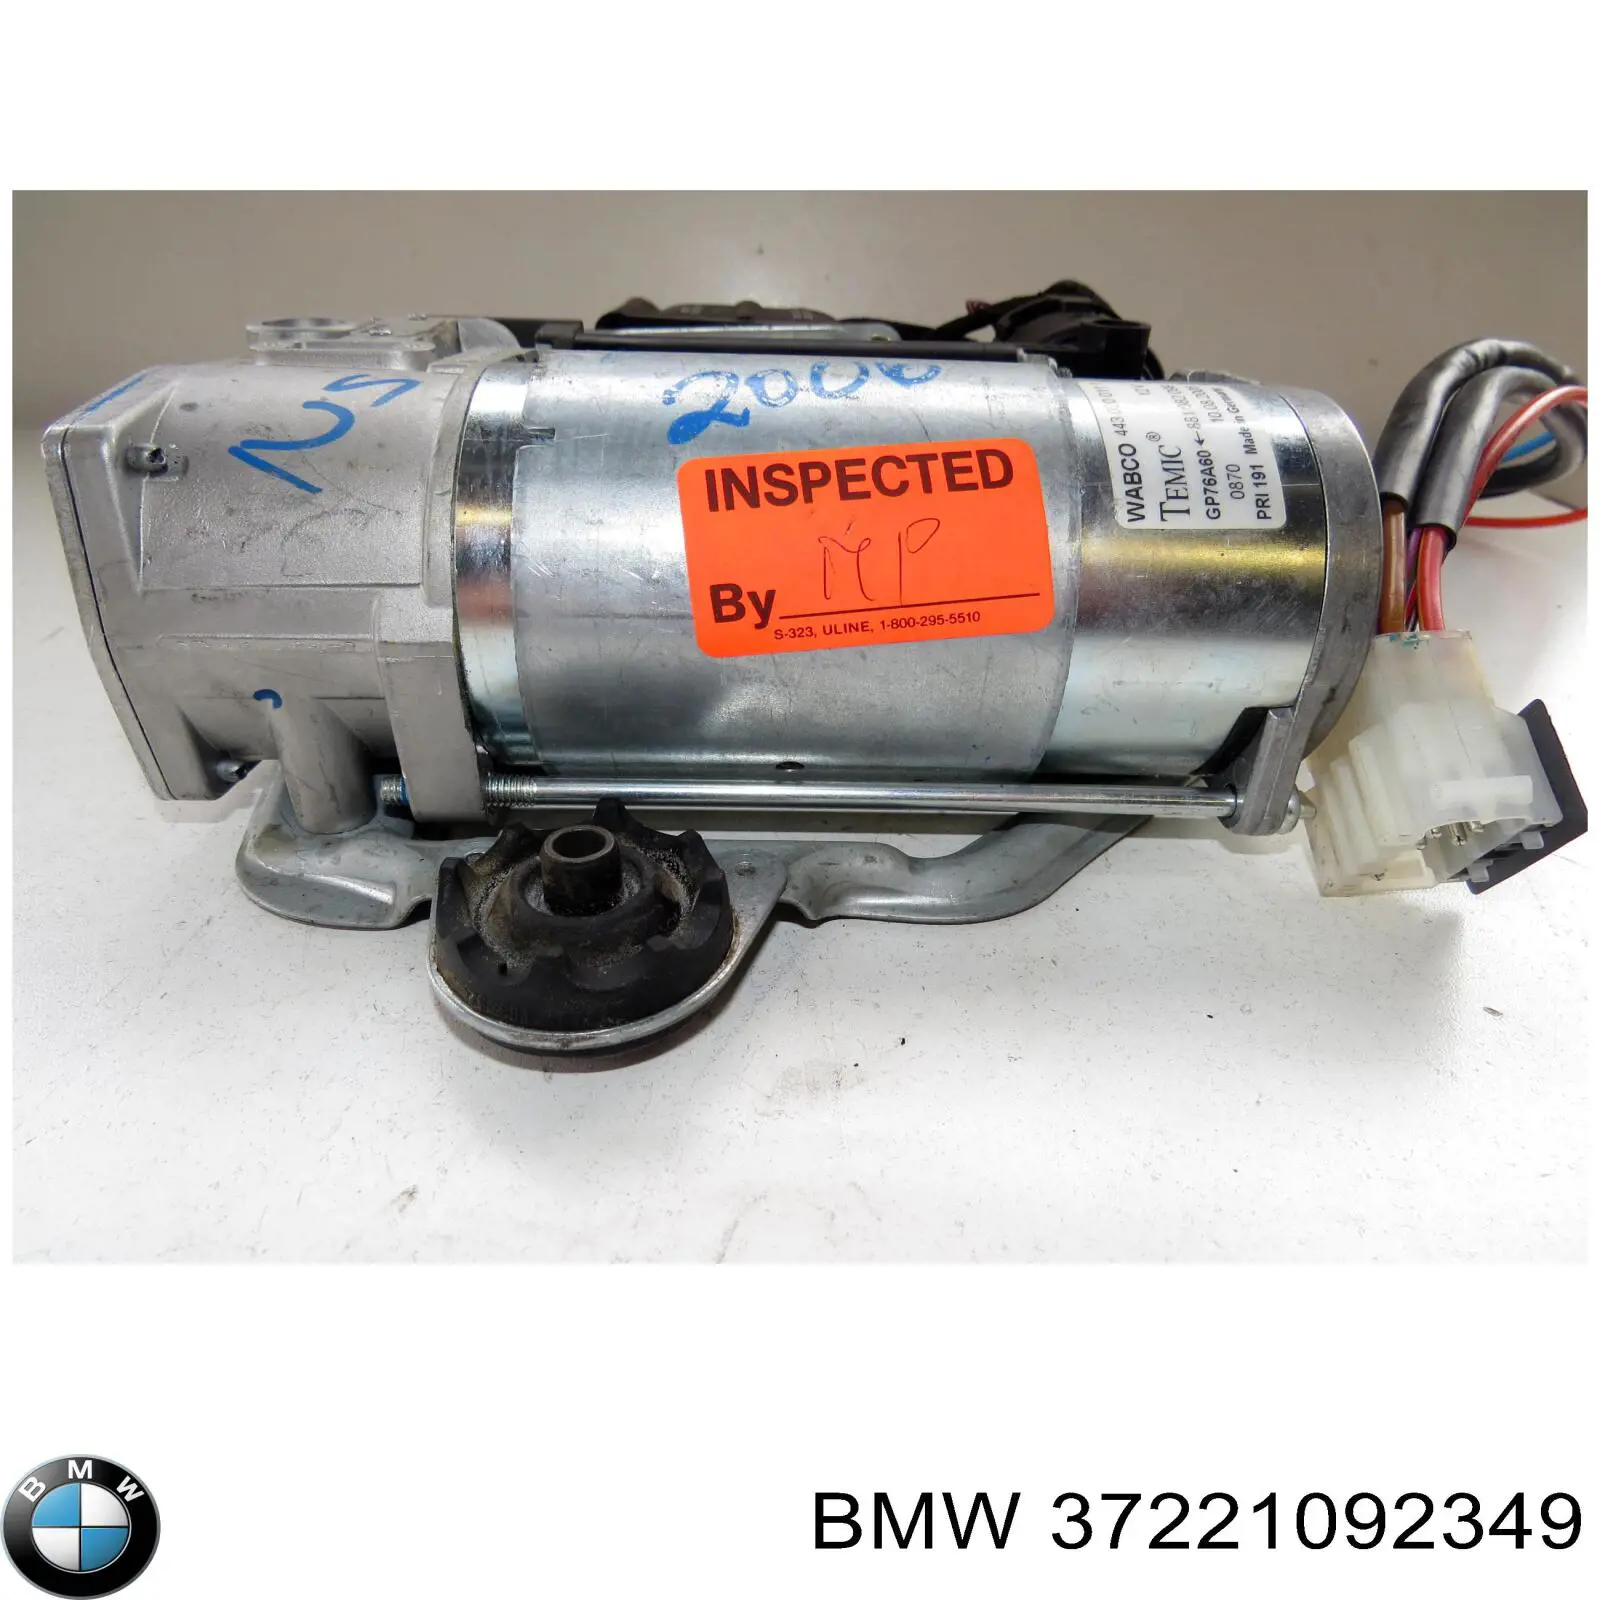 37221092349 BMW bomba de compresor de suspensión neumática